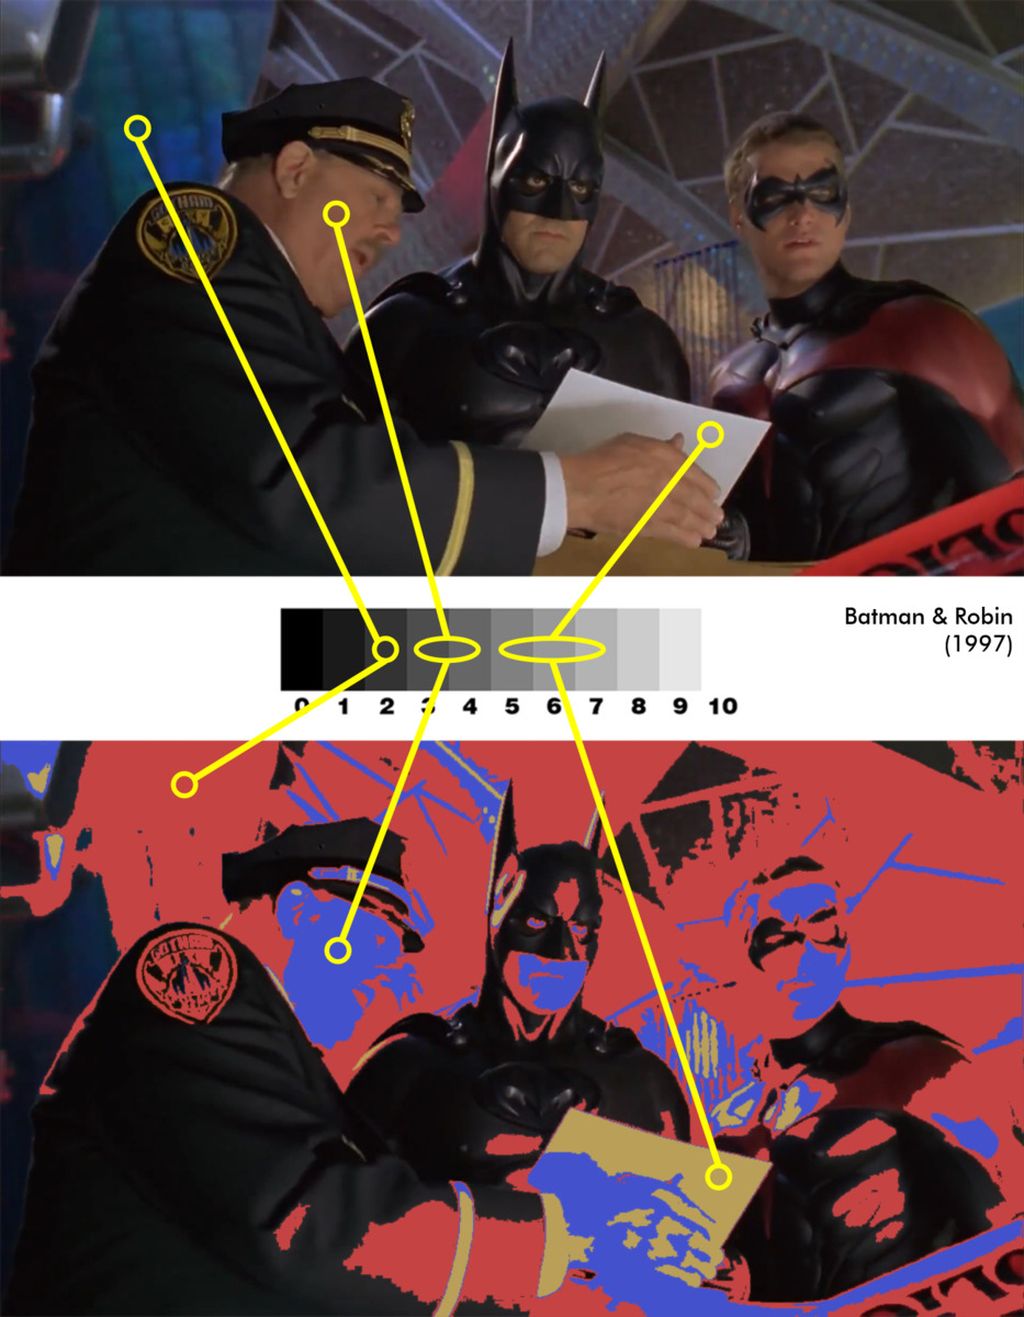 Film Batman & Robin (1997) yang dibintangi oleh George Cloony (Bruce Wayne) dan Chris O'Donnell (Dick Grayson) menampilkan tata cahaya beraneka warna dengan ragam warna neon. Tata visual Batman & Robin menjadi film <i>franchise </i>Batman dengan tampilan paling berwarna. Namun pencahayaan pada wajah karakternya berada di zona 3 dan 4 pada frame di atas.